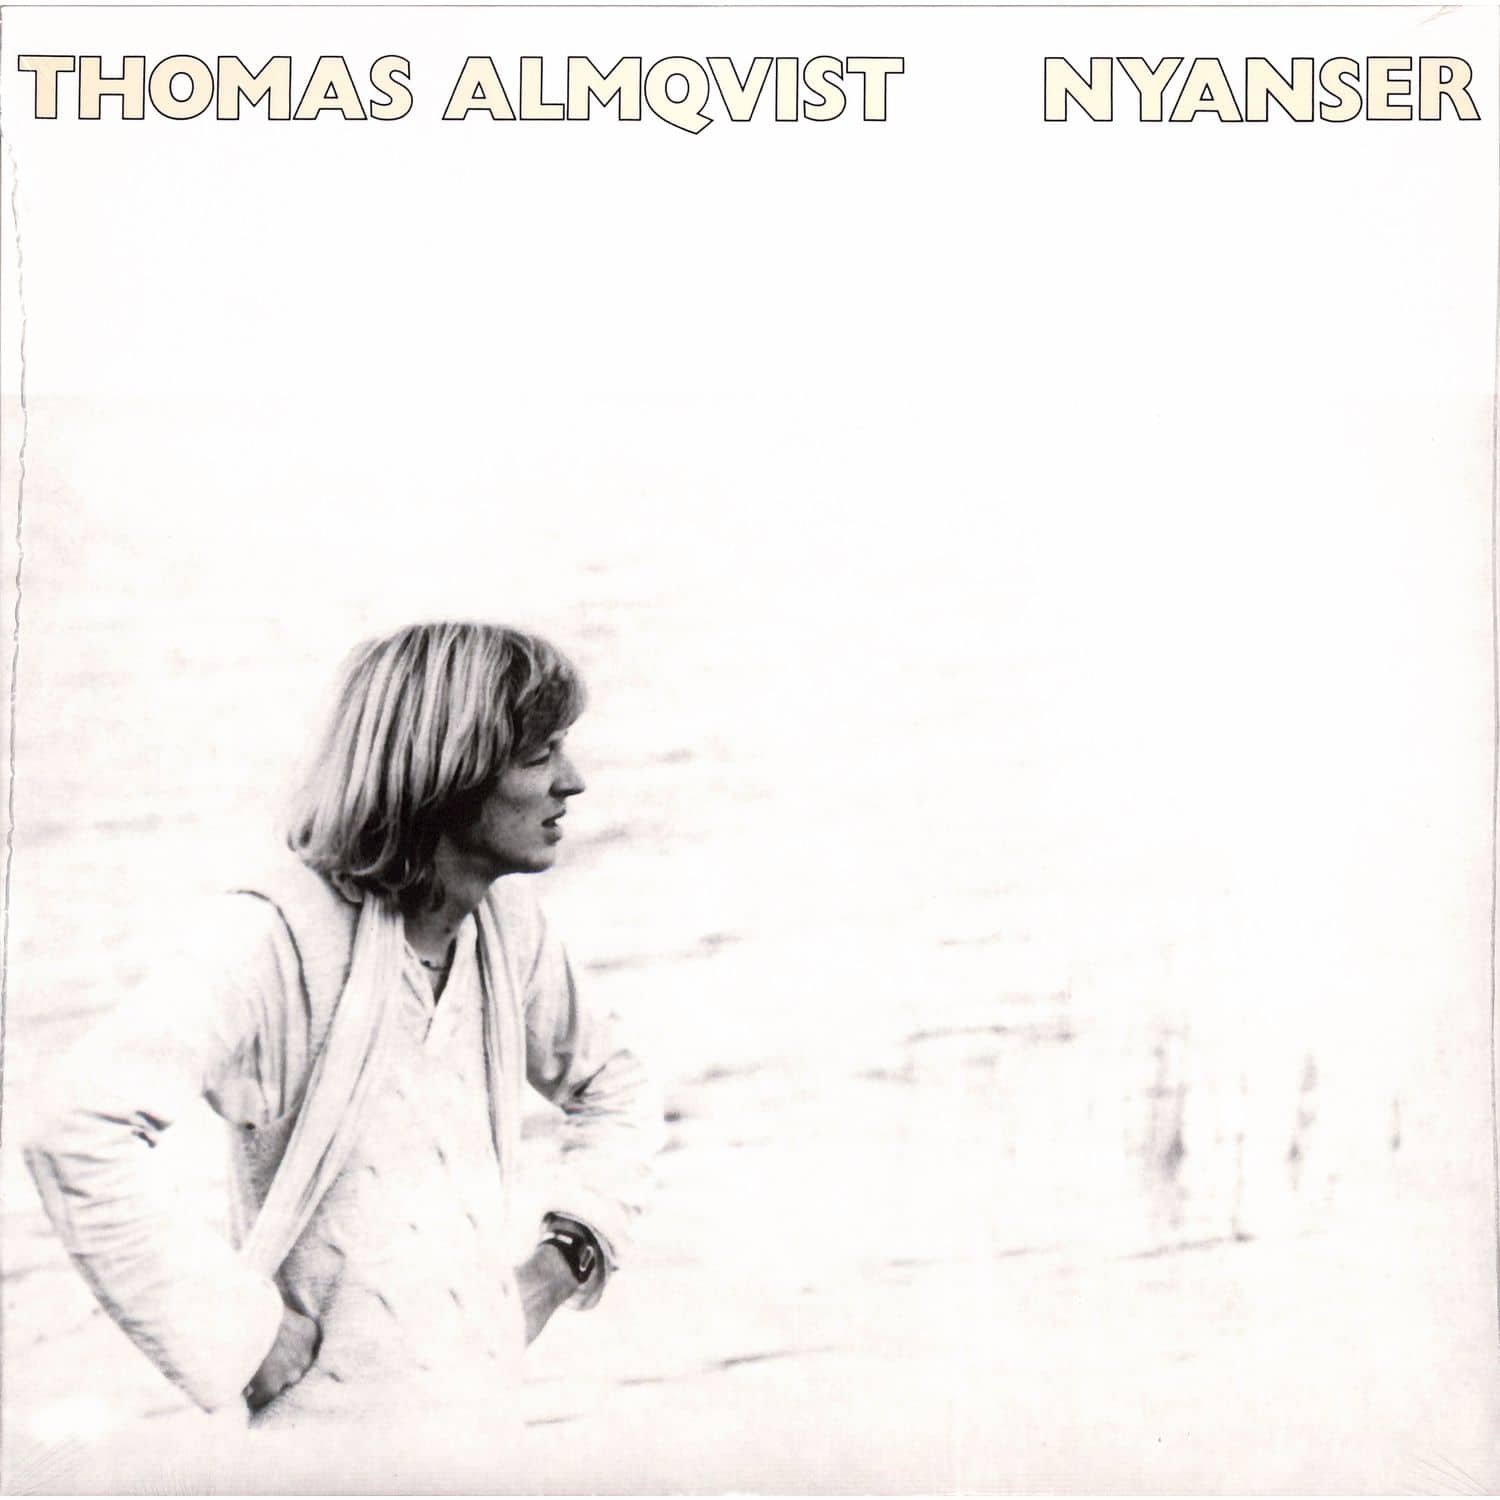 Thomas Almqvist - NYANSER 